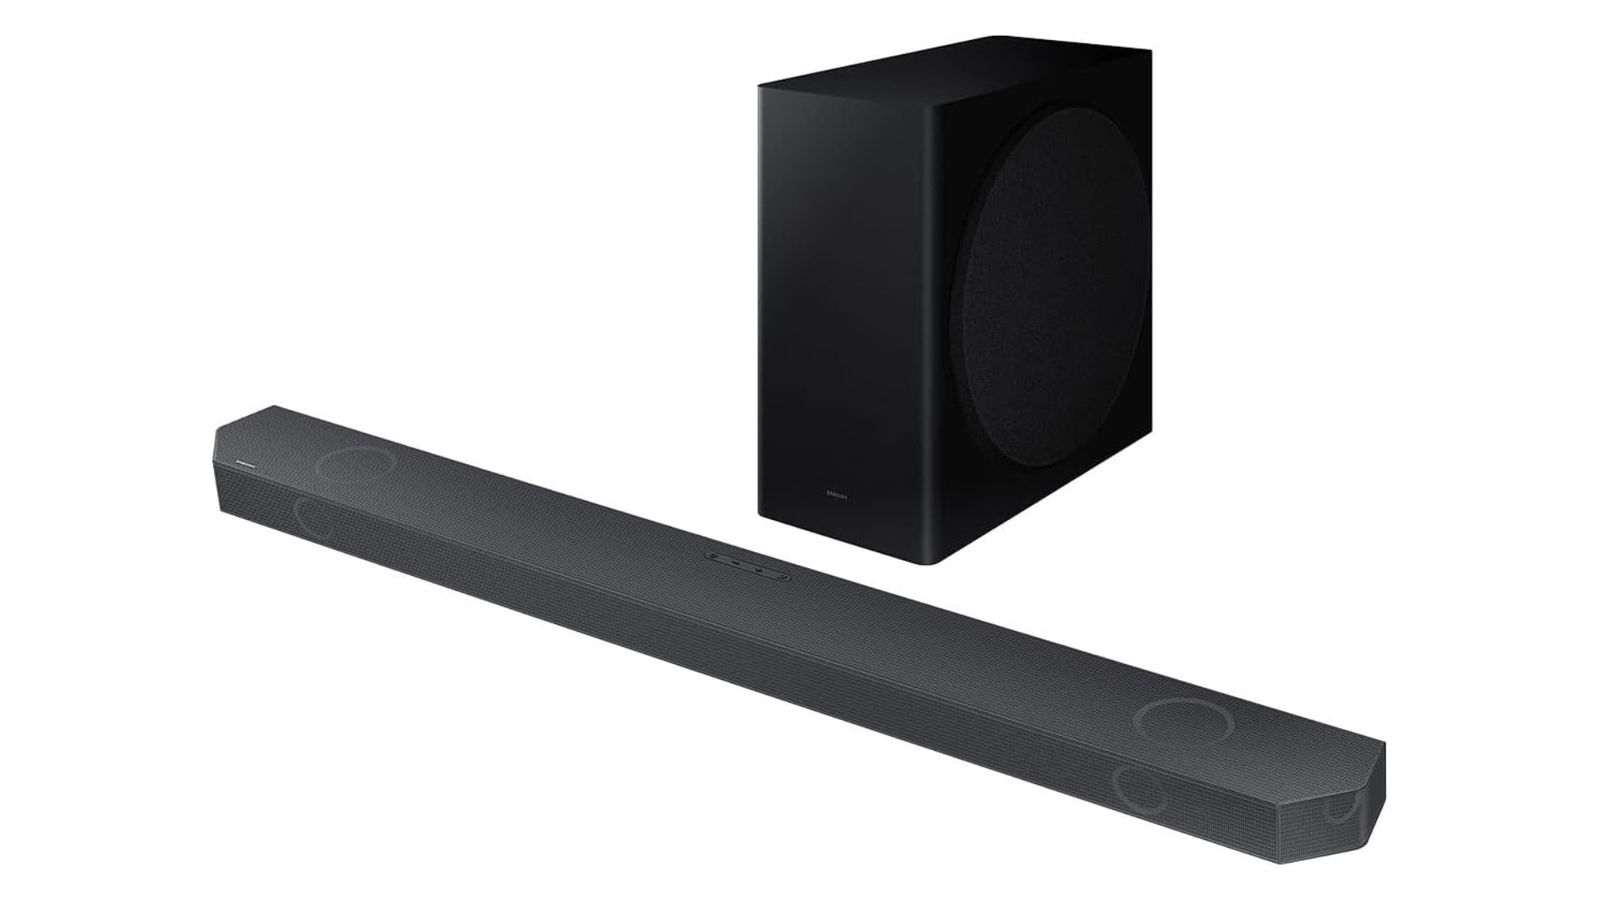 Samsung HW-Q800B product image of a long dark grey soundbar in front of a black subwoofer.